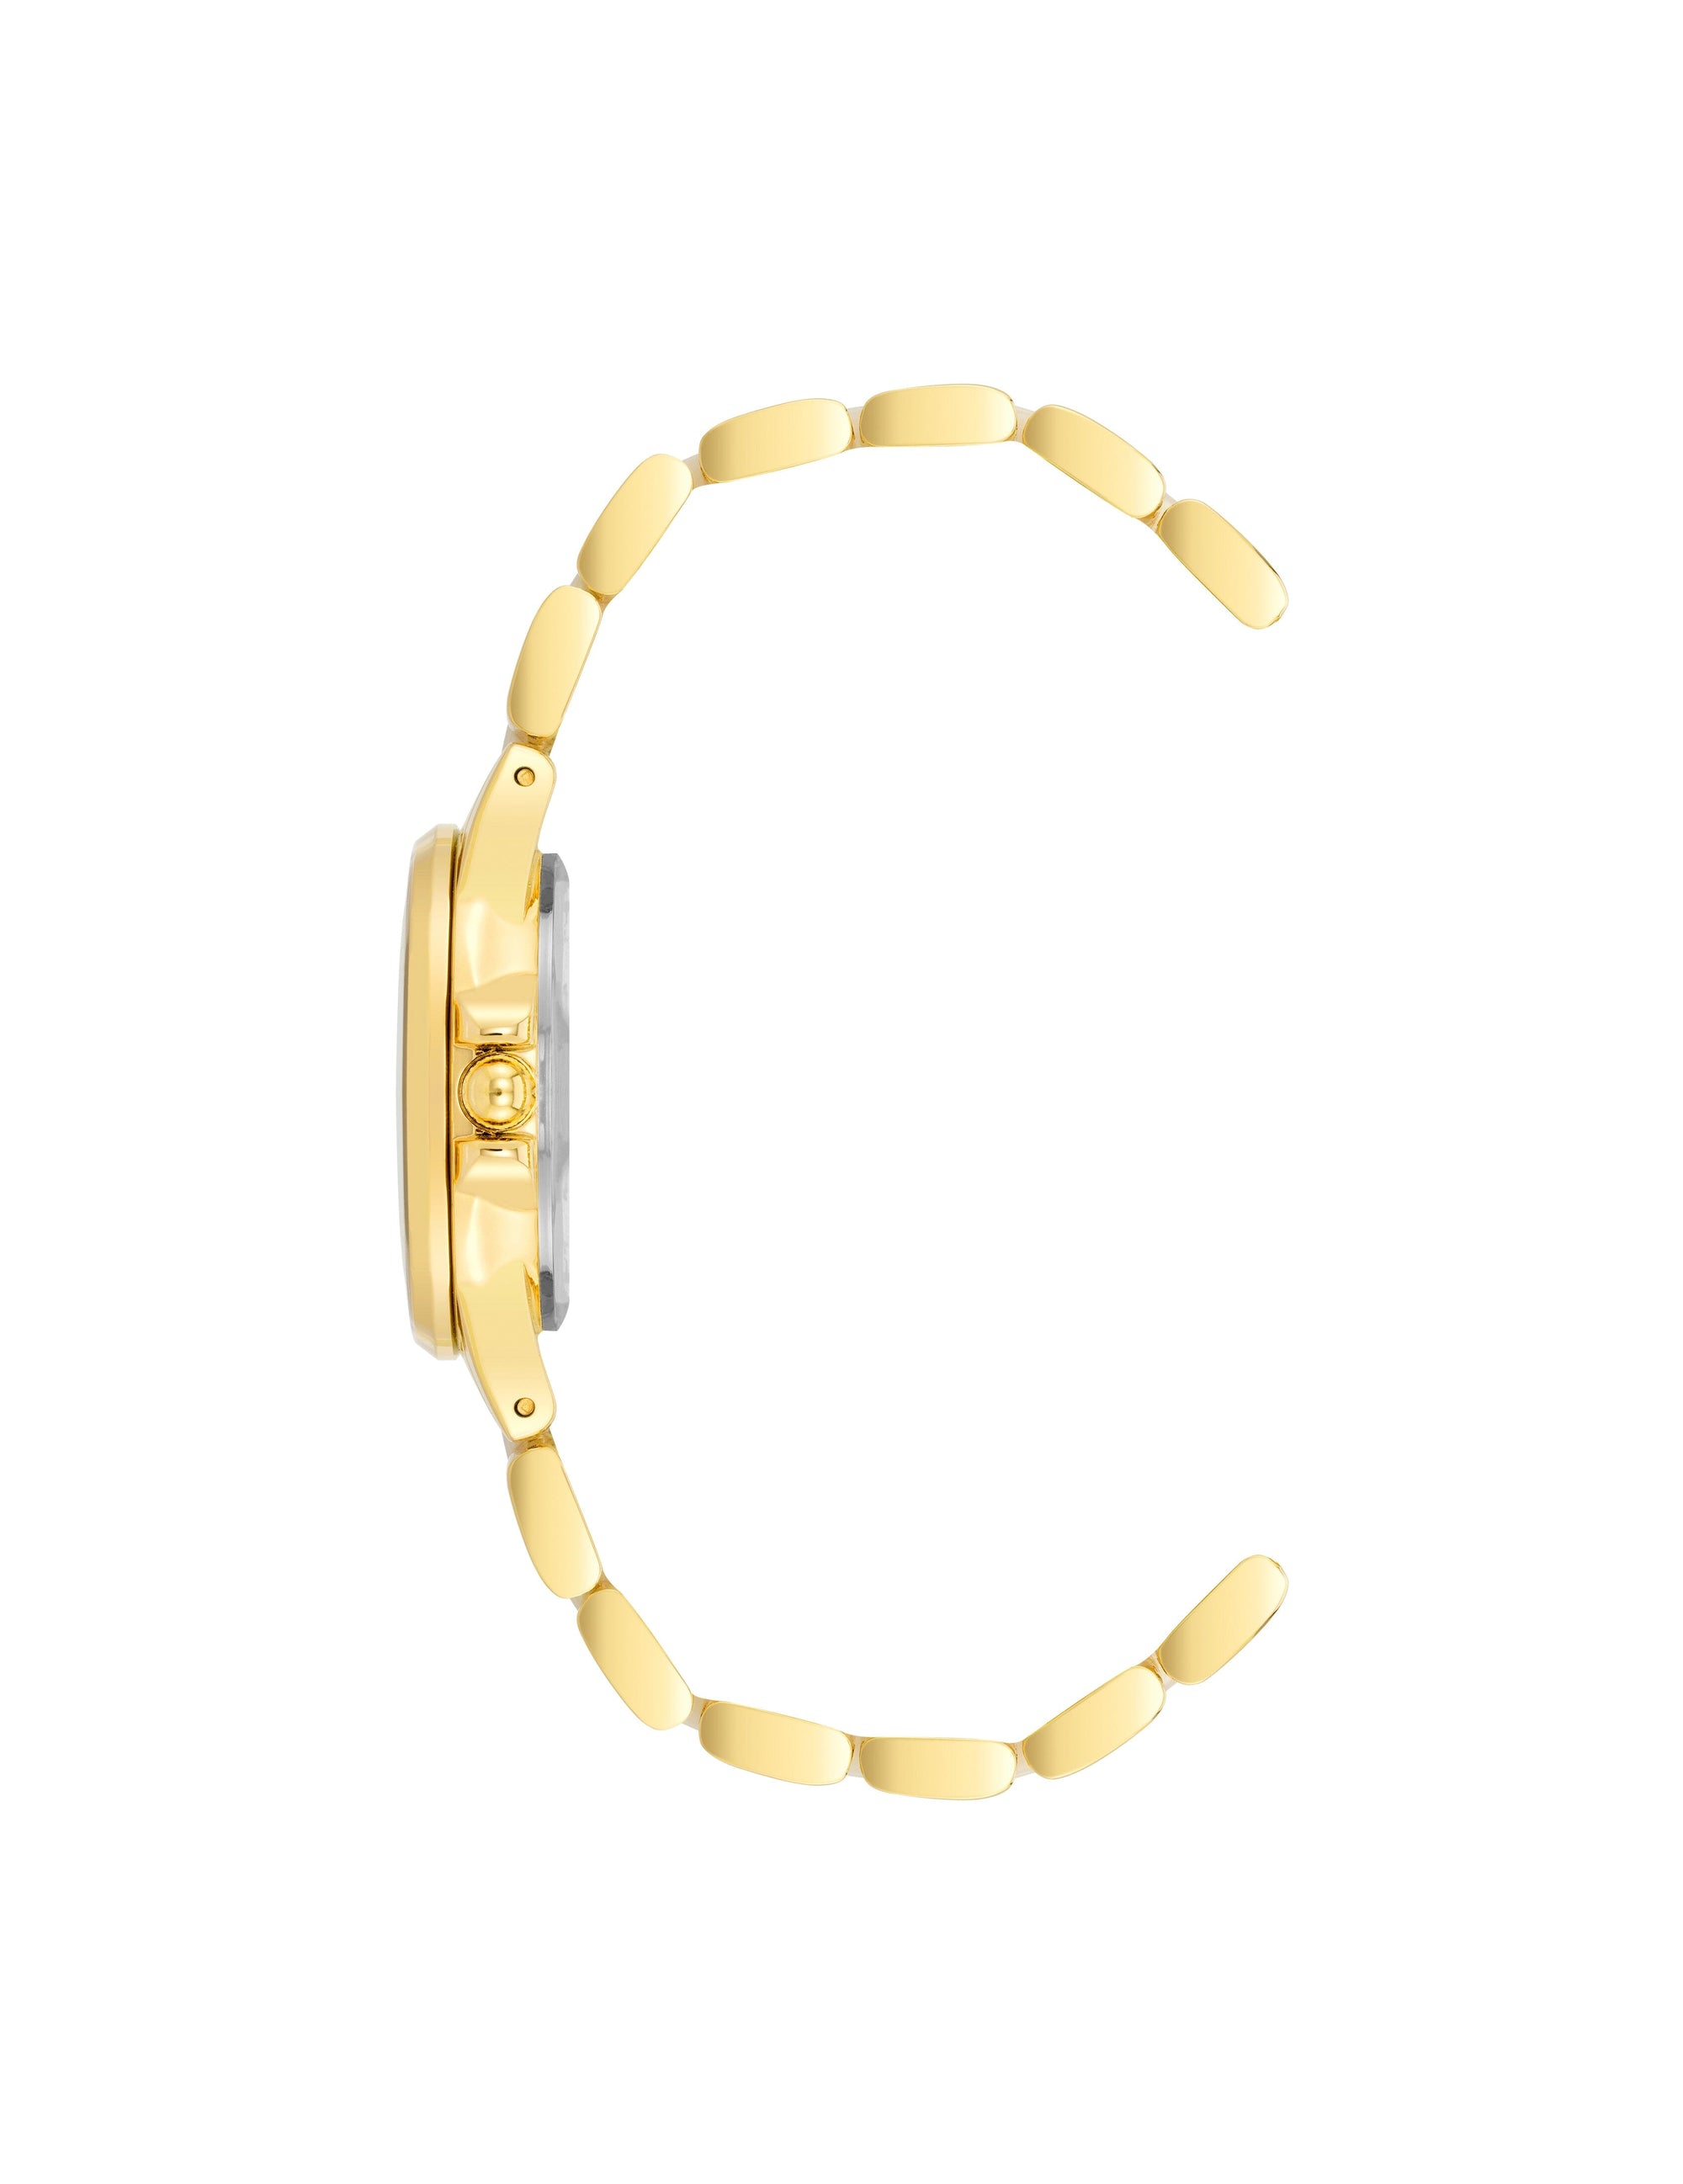 Anne Klein Taupe/Gold-Tone Diamond Accented Ceramic Bracelet Watch